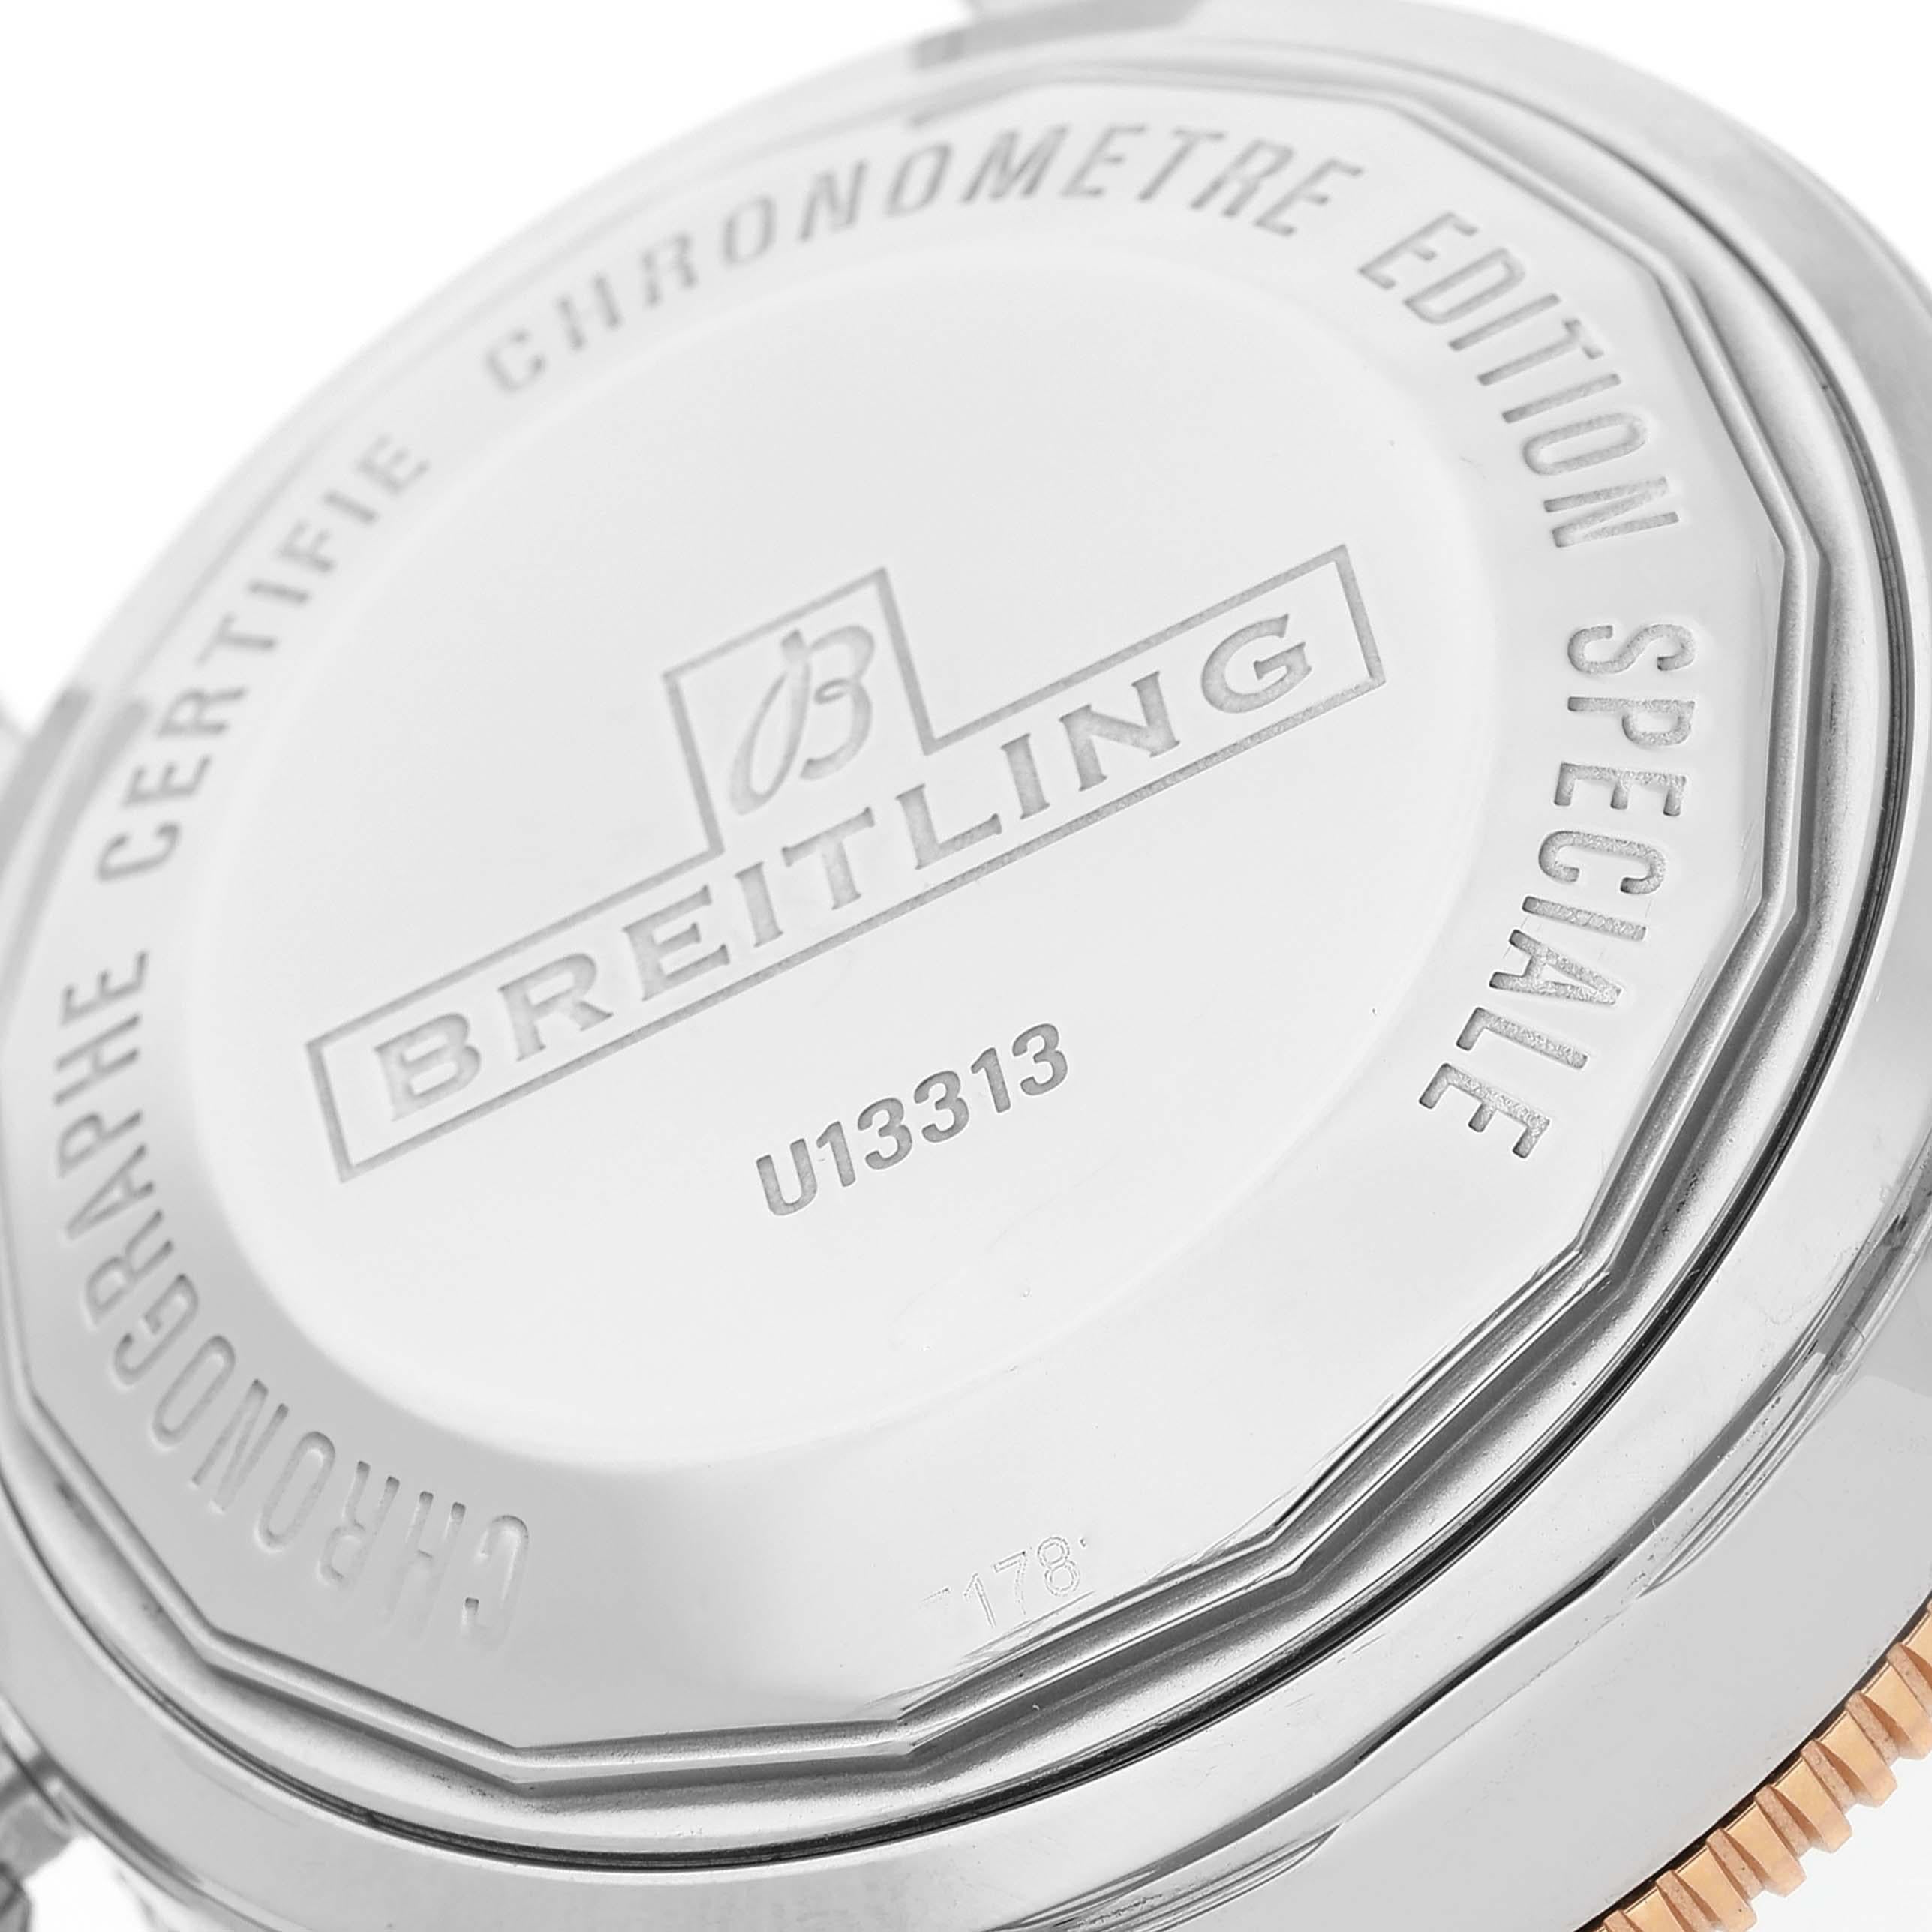 Men's Breitling Superocean Heritage II Steel Rose Gold Mens Watch U13313 Box Card For Sale